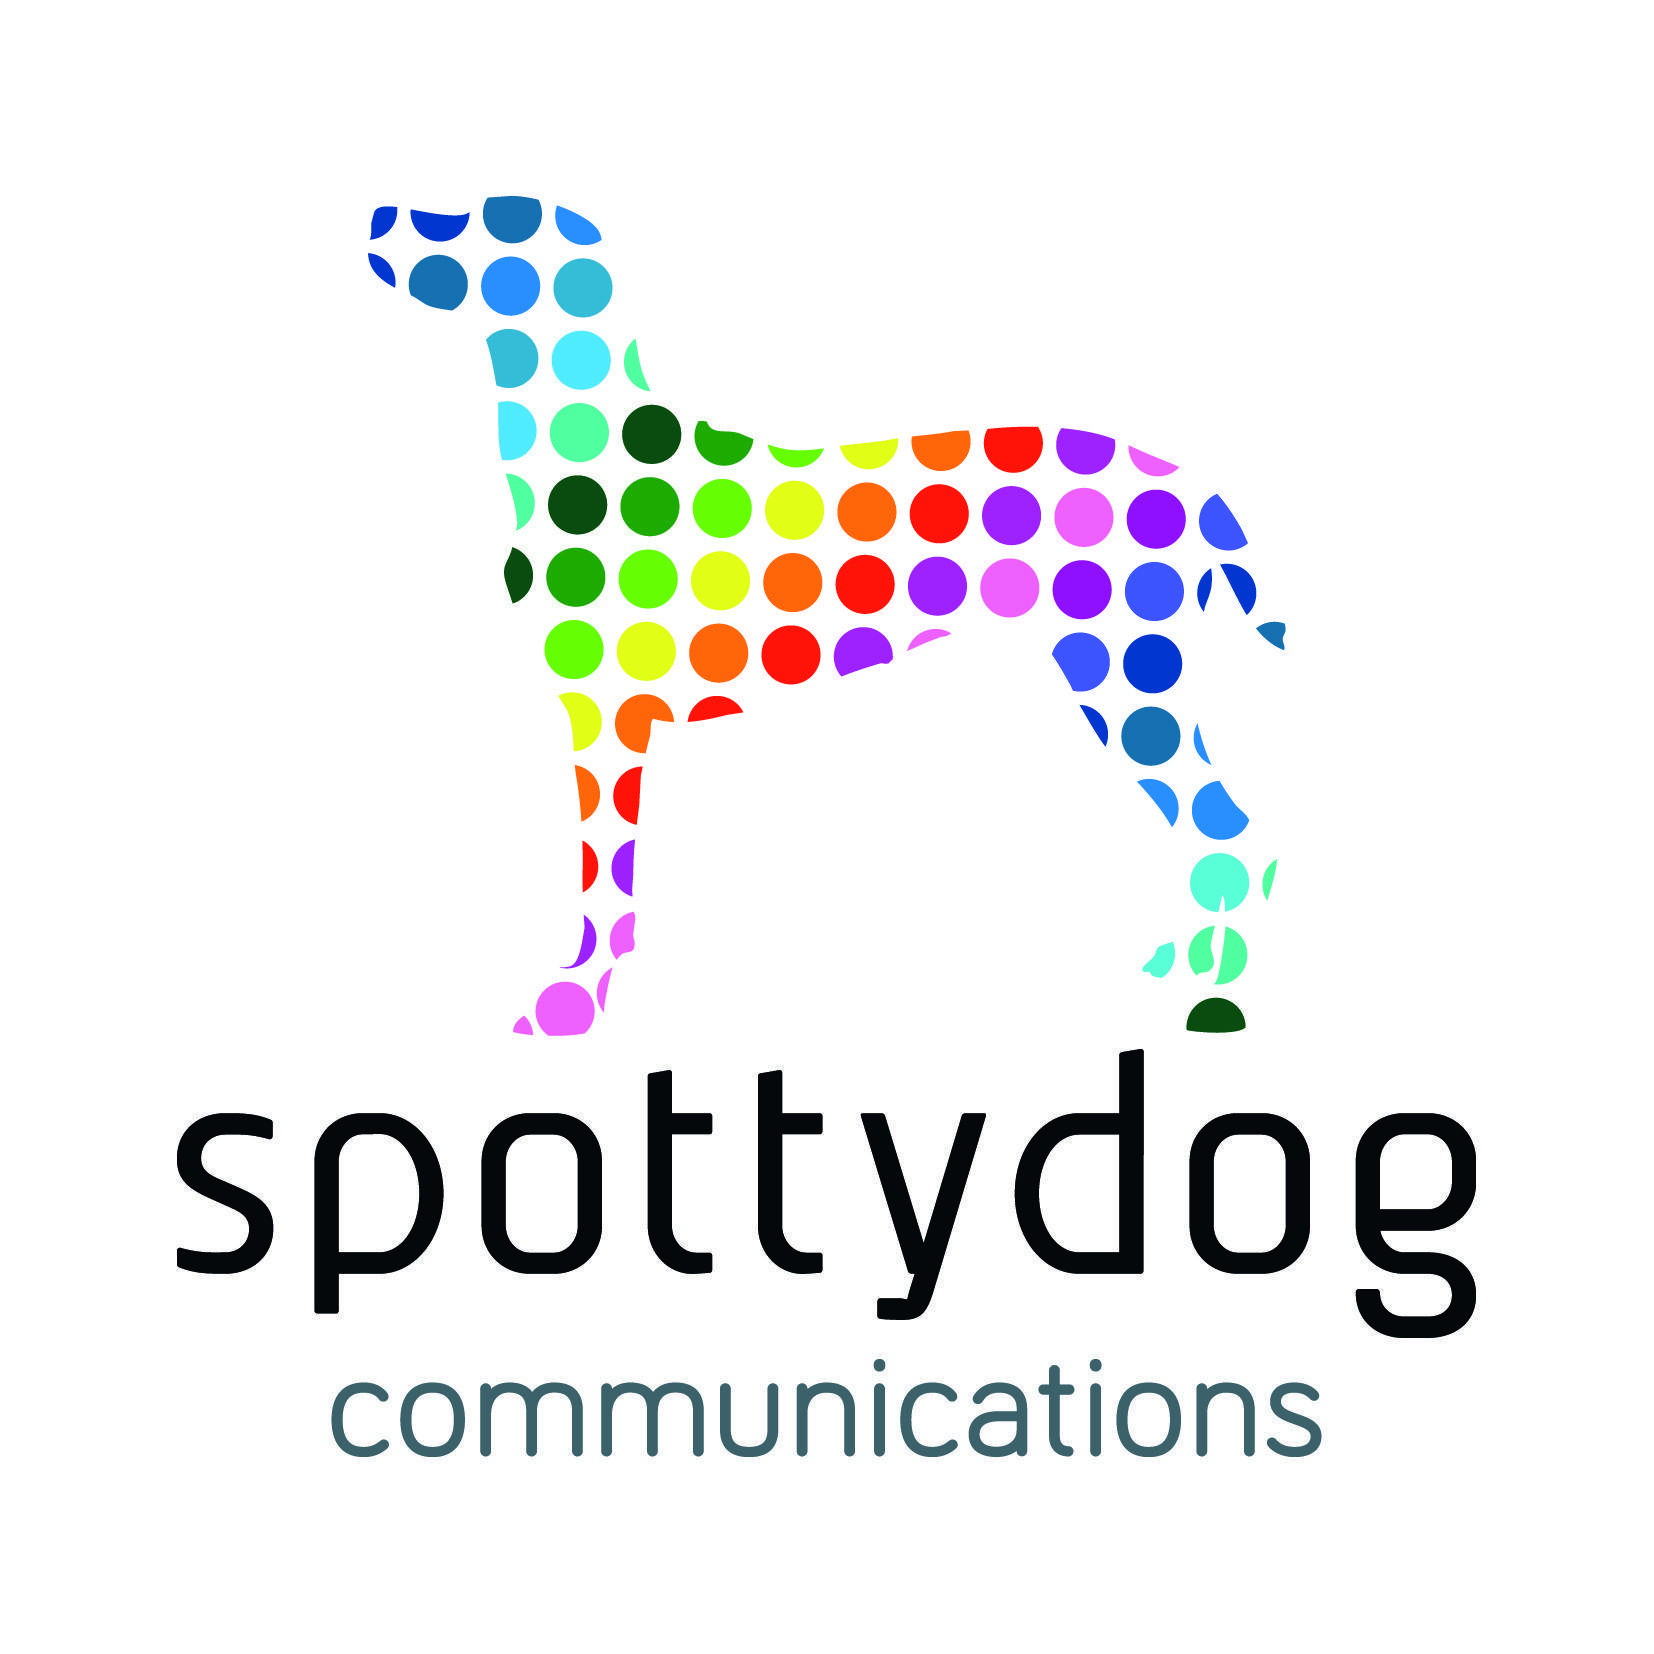 Communications Logo - spottydog communications. Midlands based communications agency